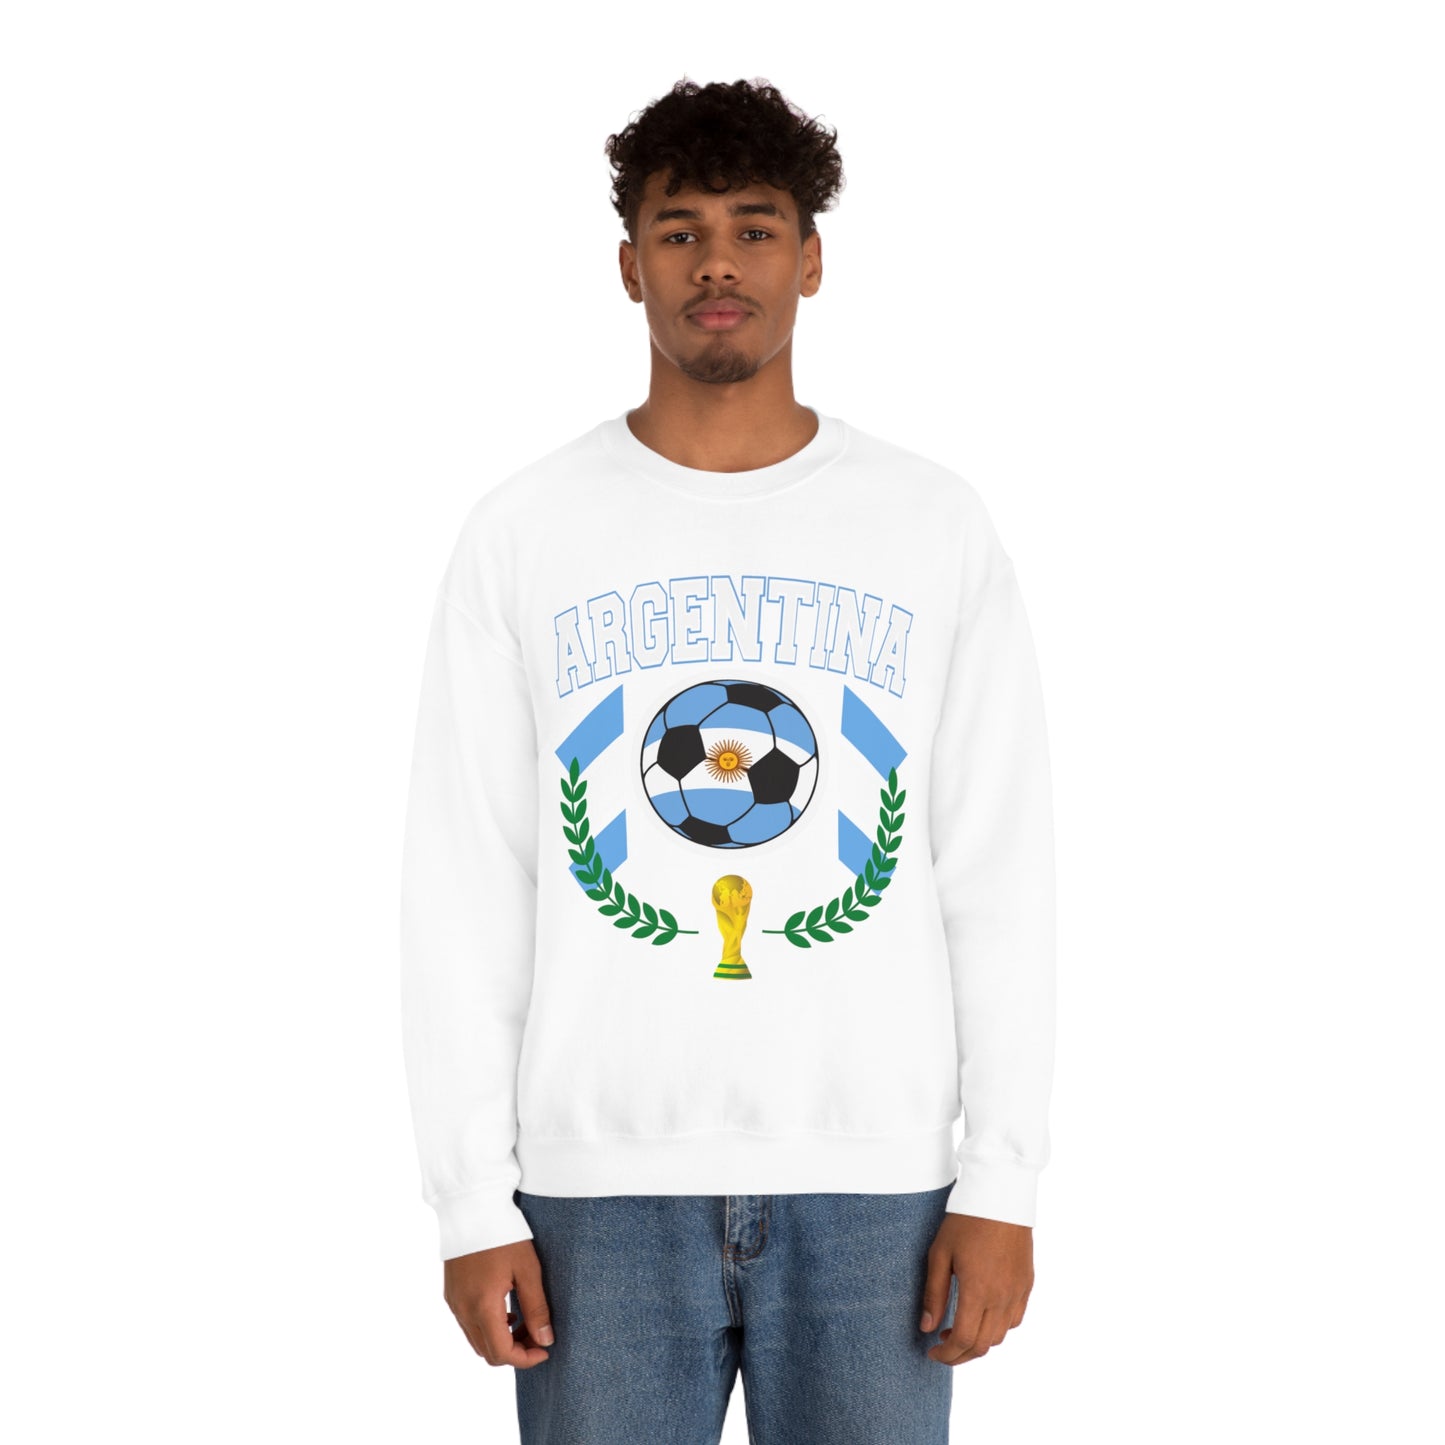 Argentina World Cup Soccer  Unisex Heavy Blend Crewneck Sweatshirt